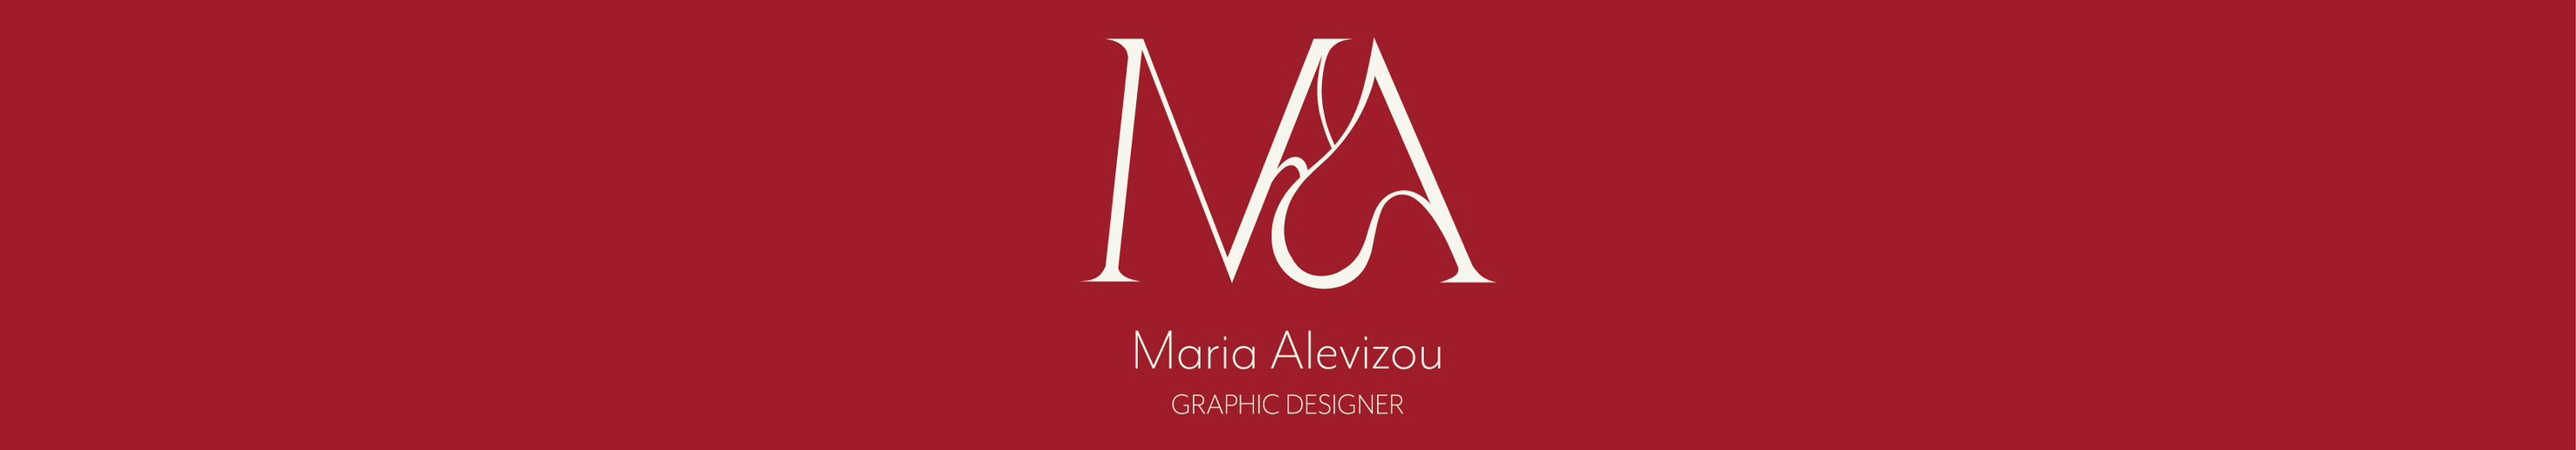 Baner profilu użytkownika Maria Alevizou